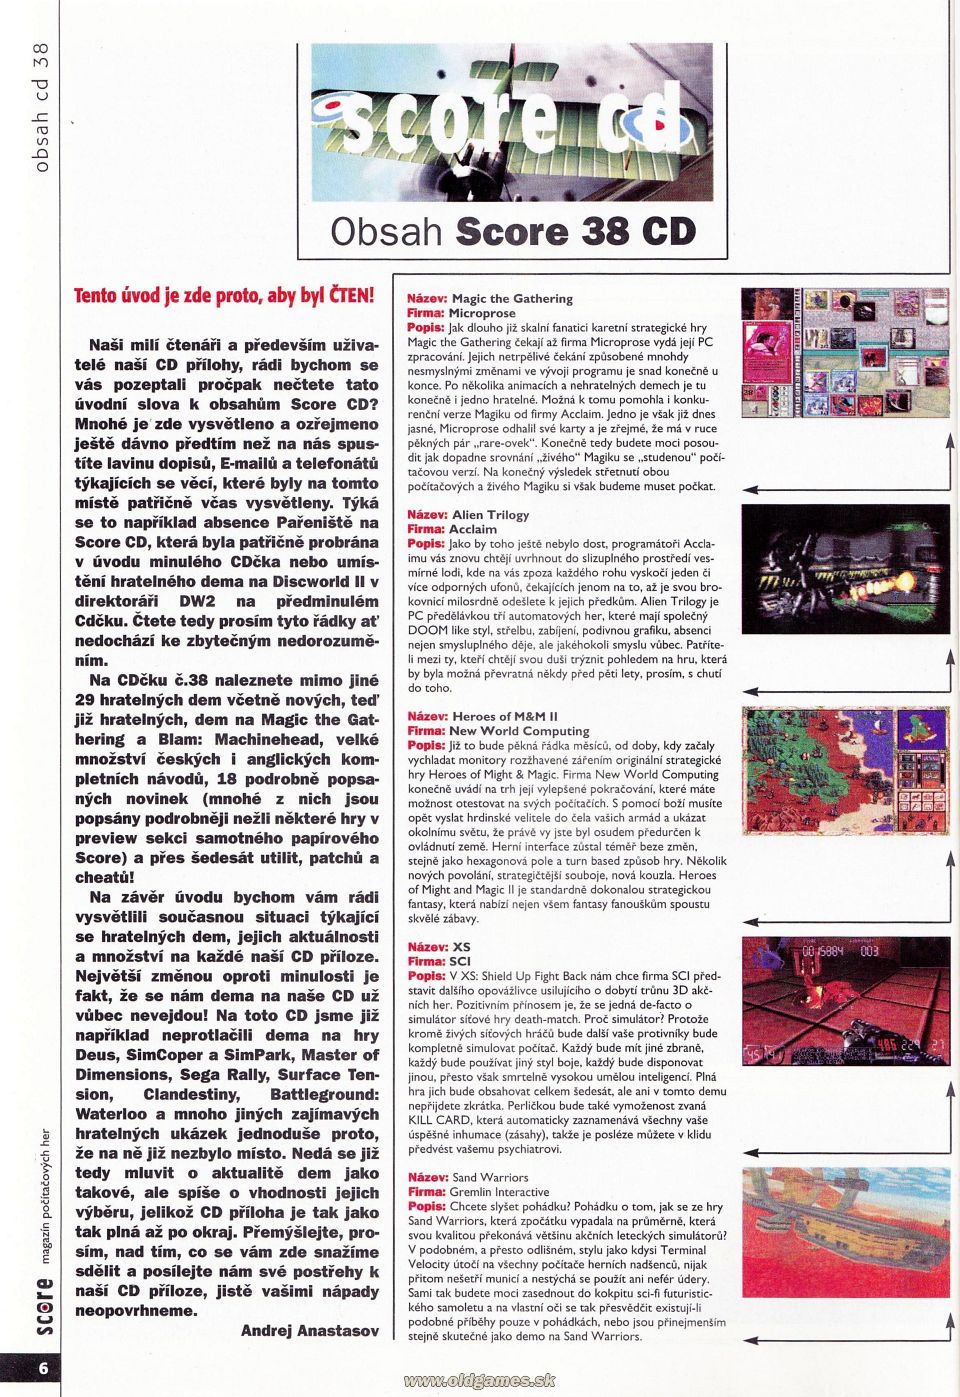 Obsah Score CD 38